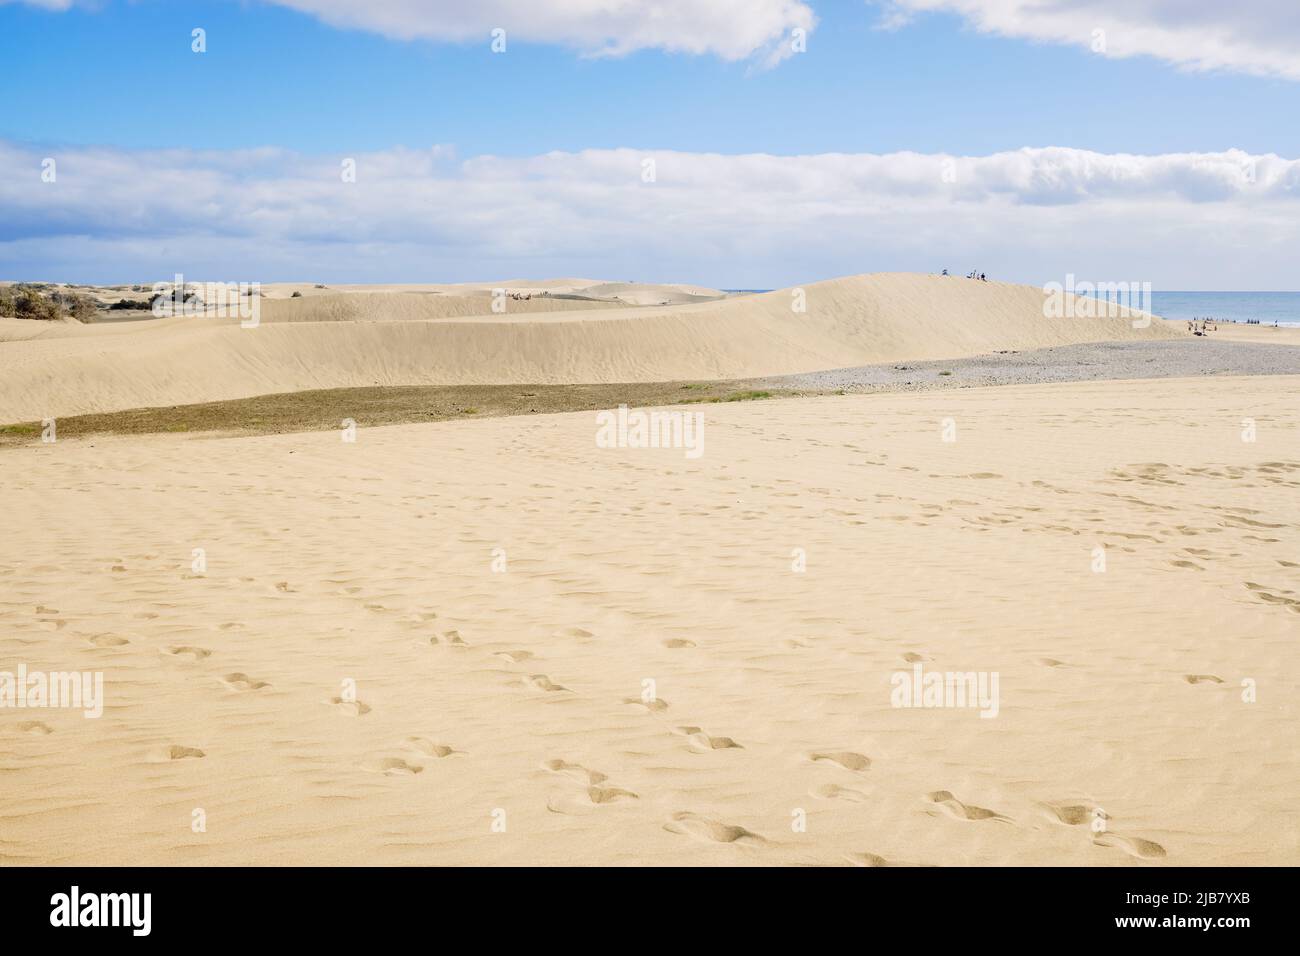 Sand dunes on the Canarian beach of Maspalomas. Stock Photo